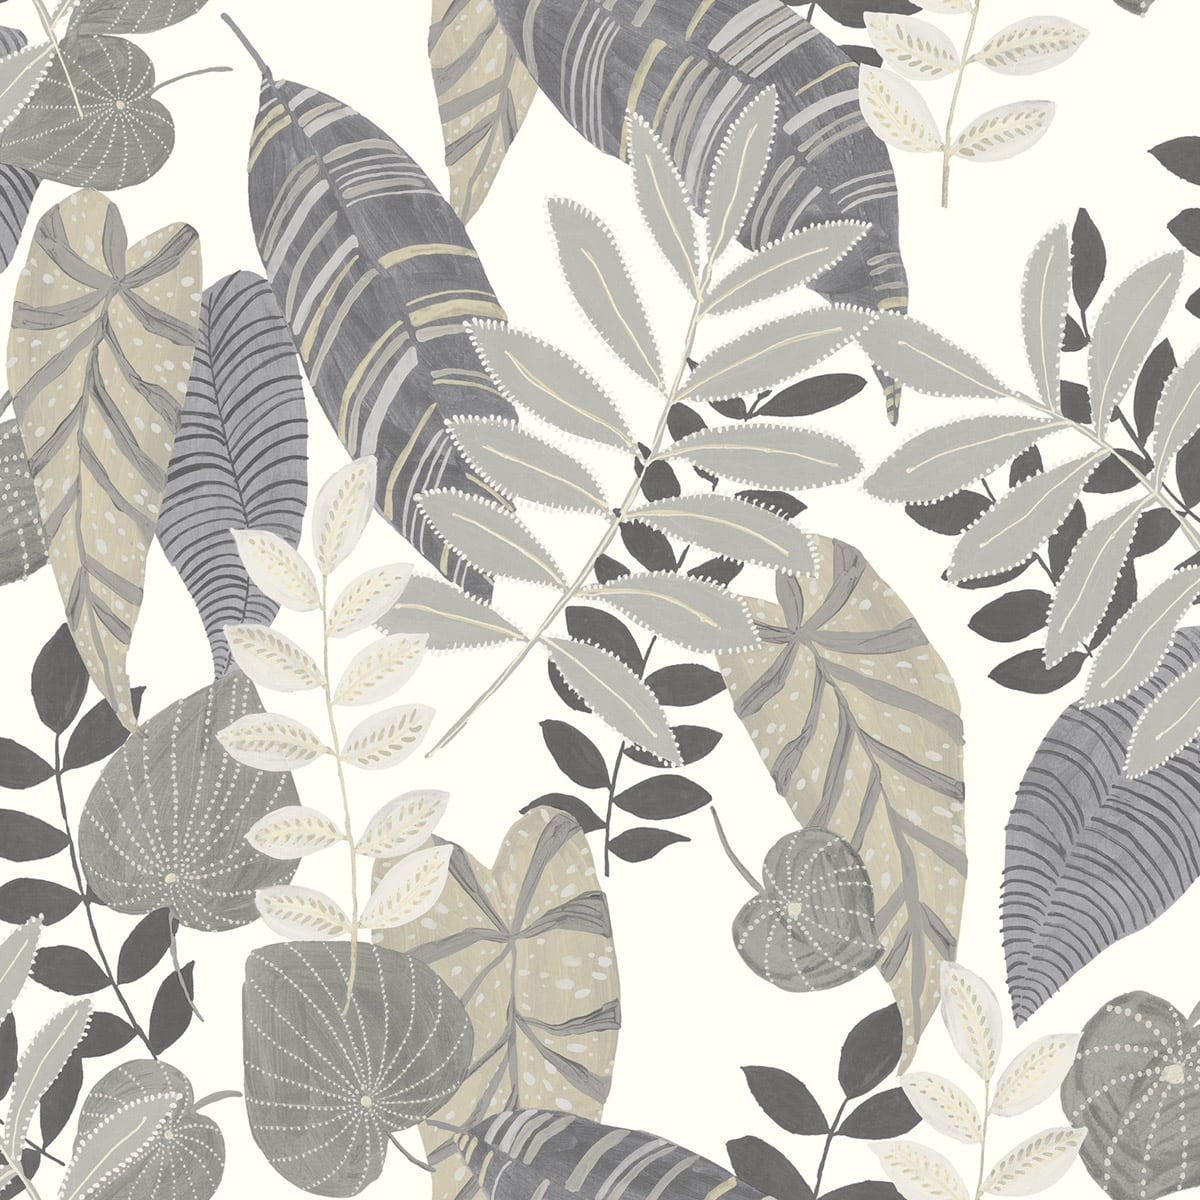 Seabrook Designs RY30908 Boho Rhapsody Tropicana Leaves  Wallpaper Charcoal, Stone, and Daydream Gray